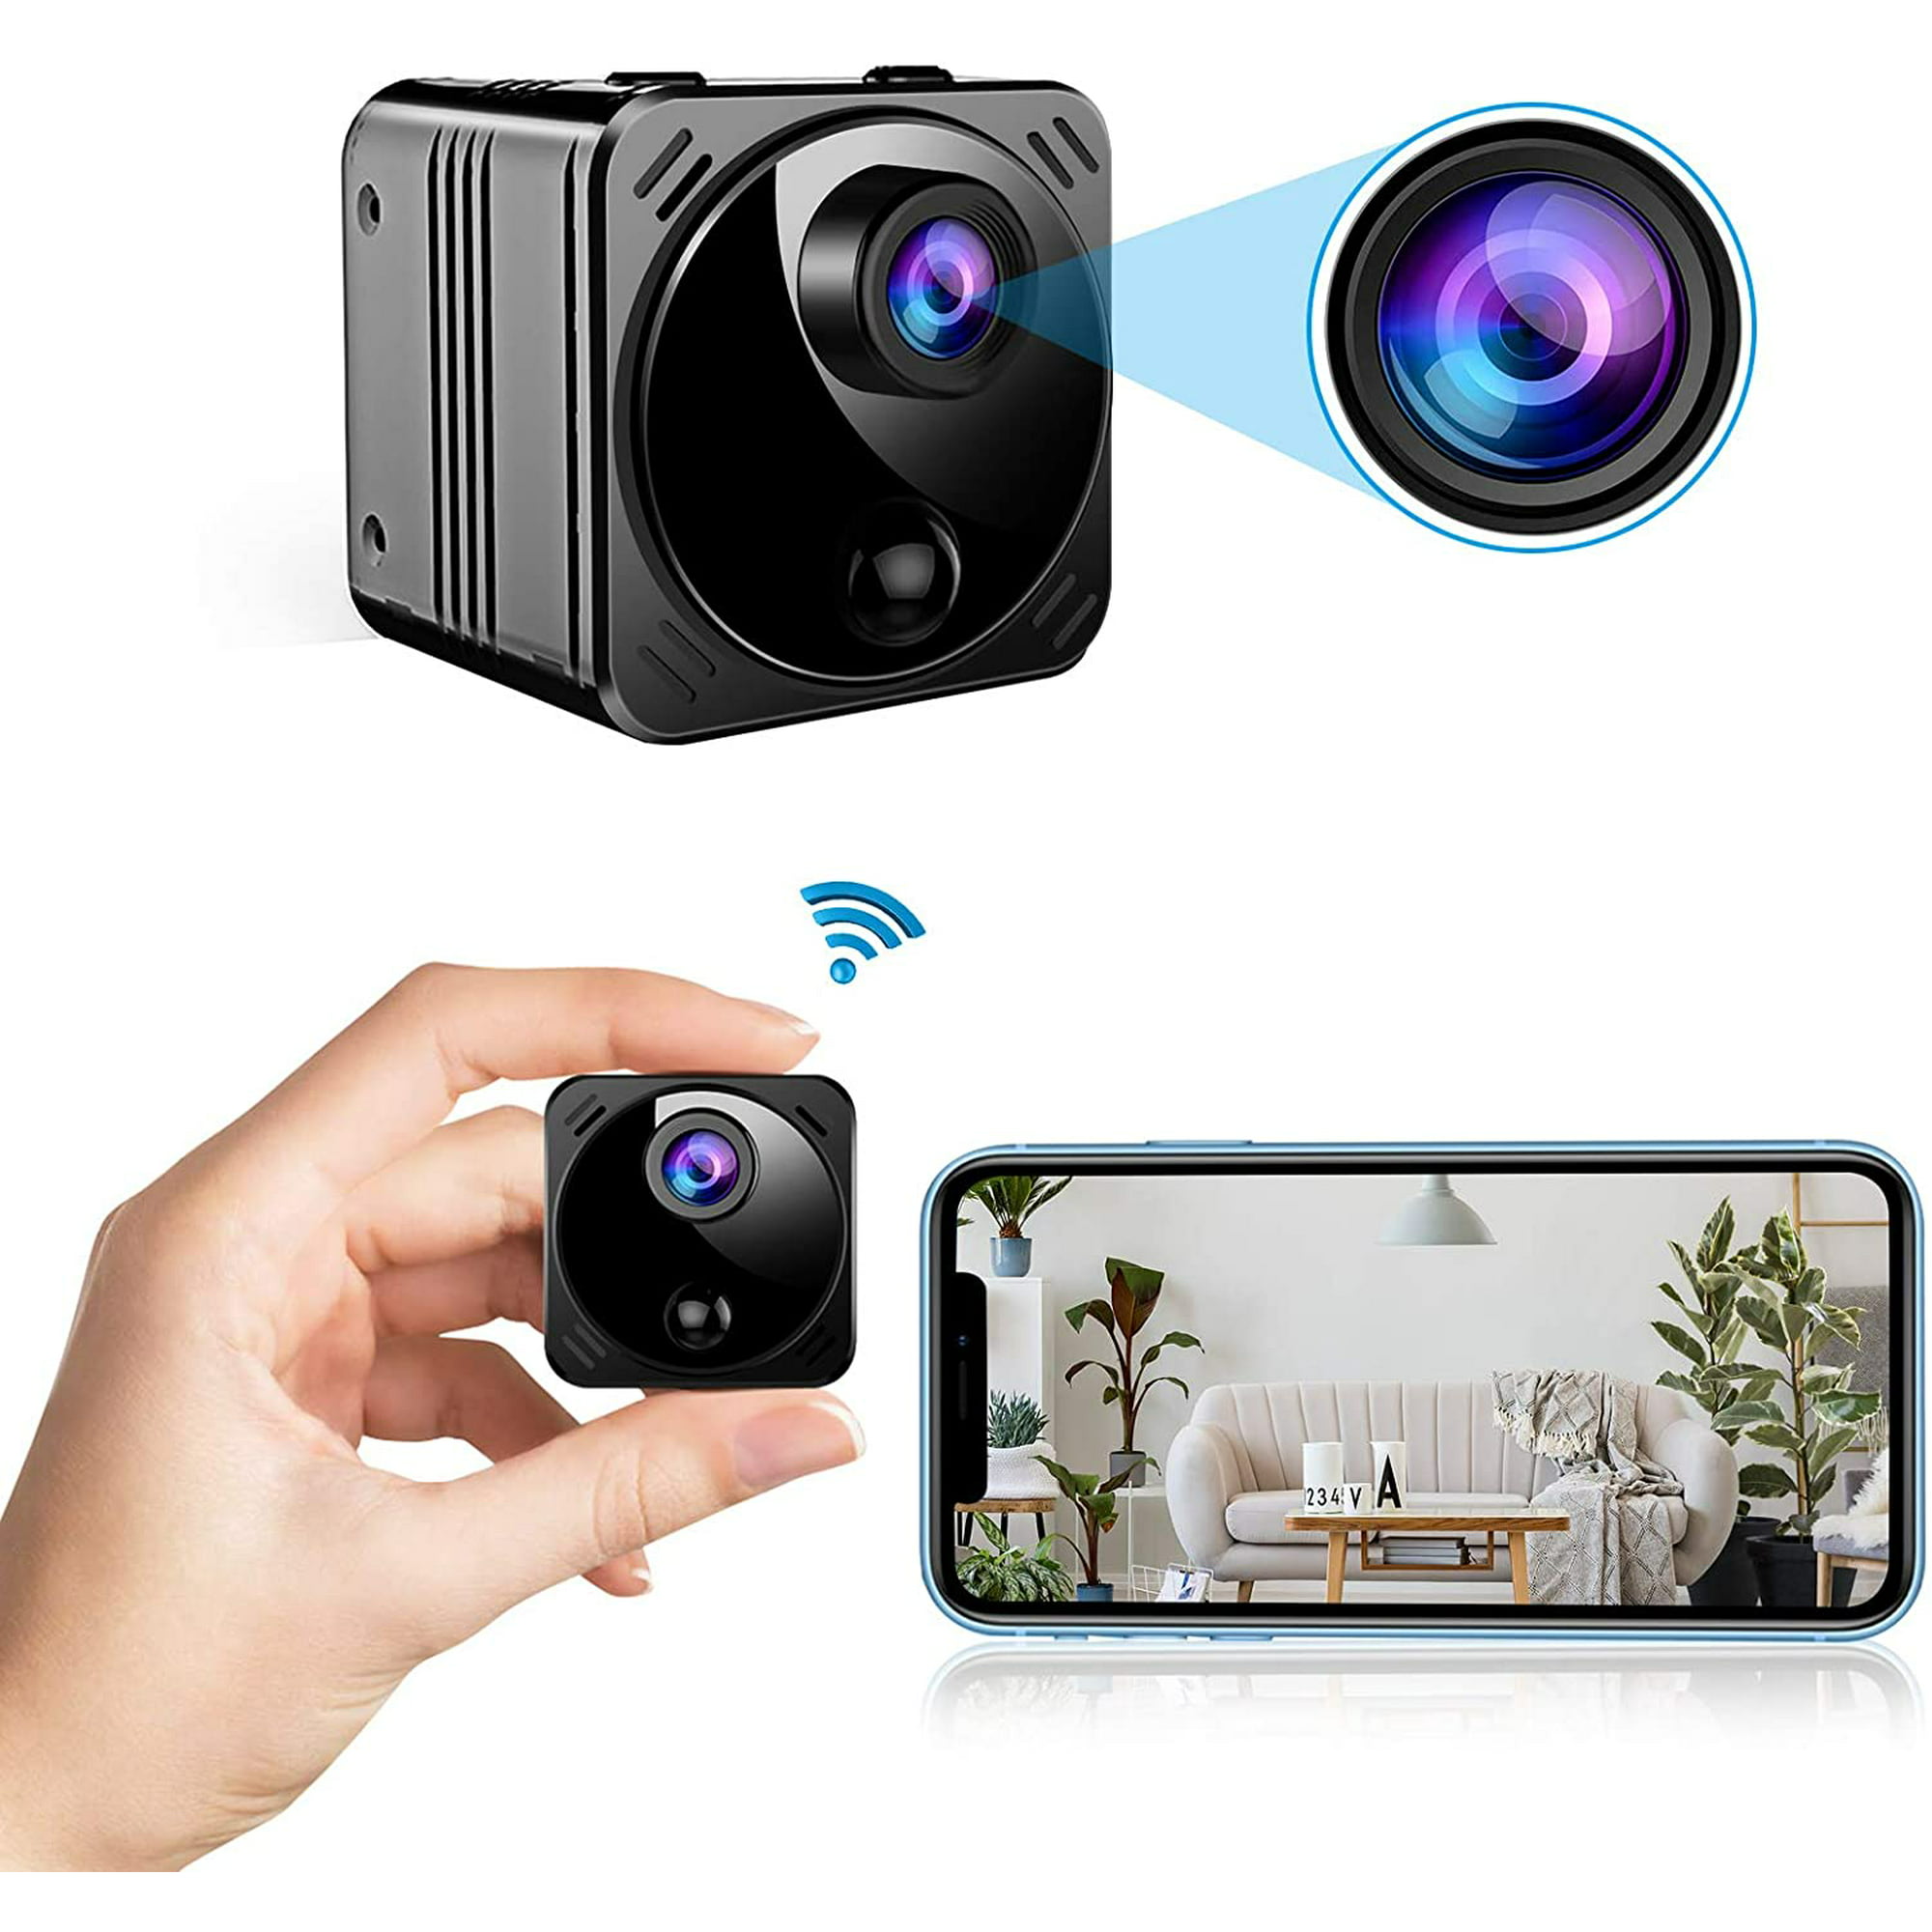 Mini cámara espía Cámaras ocultas inalámbricas WiFi - Real 1080P HD Cámara  oculta para niñera con aplicación de teléfono celular, pequeña cámara de  seguridad encubierta con detección de movimiento de visión nocturna